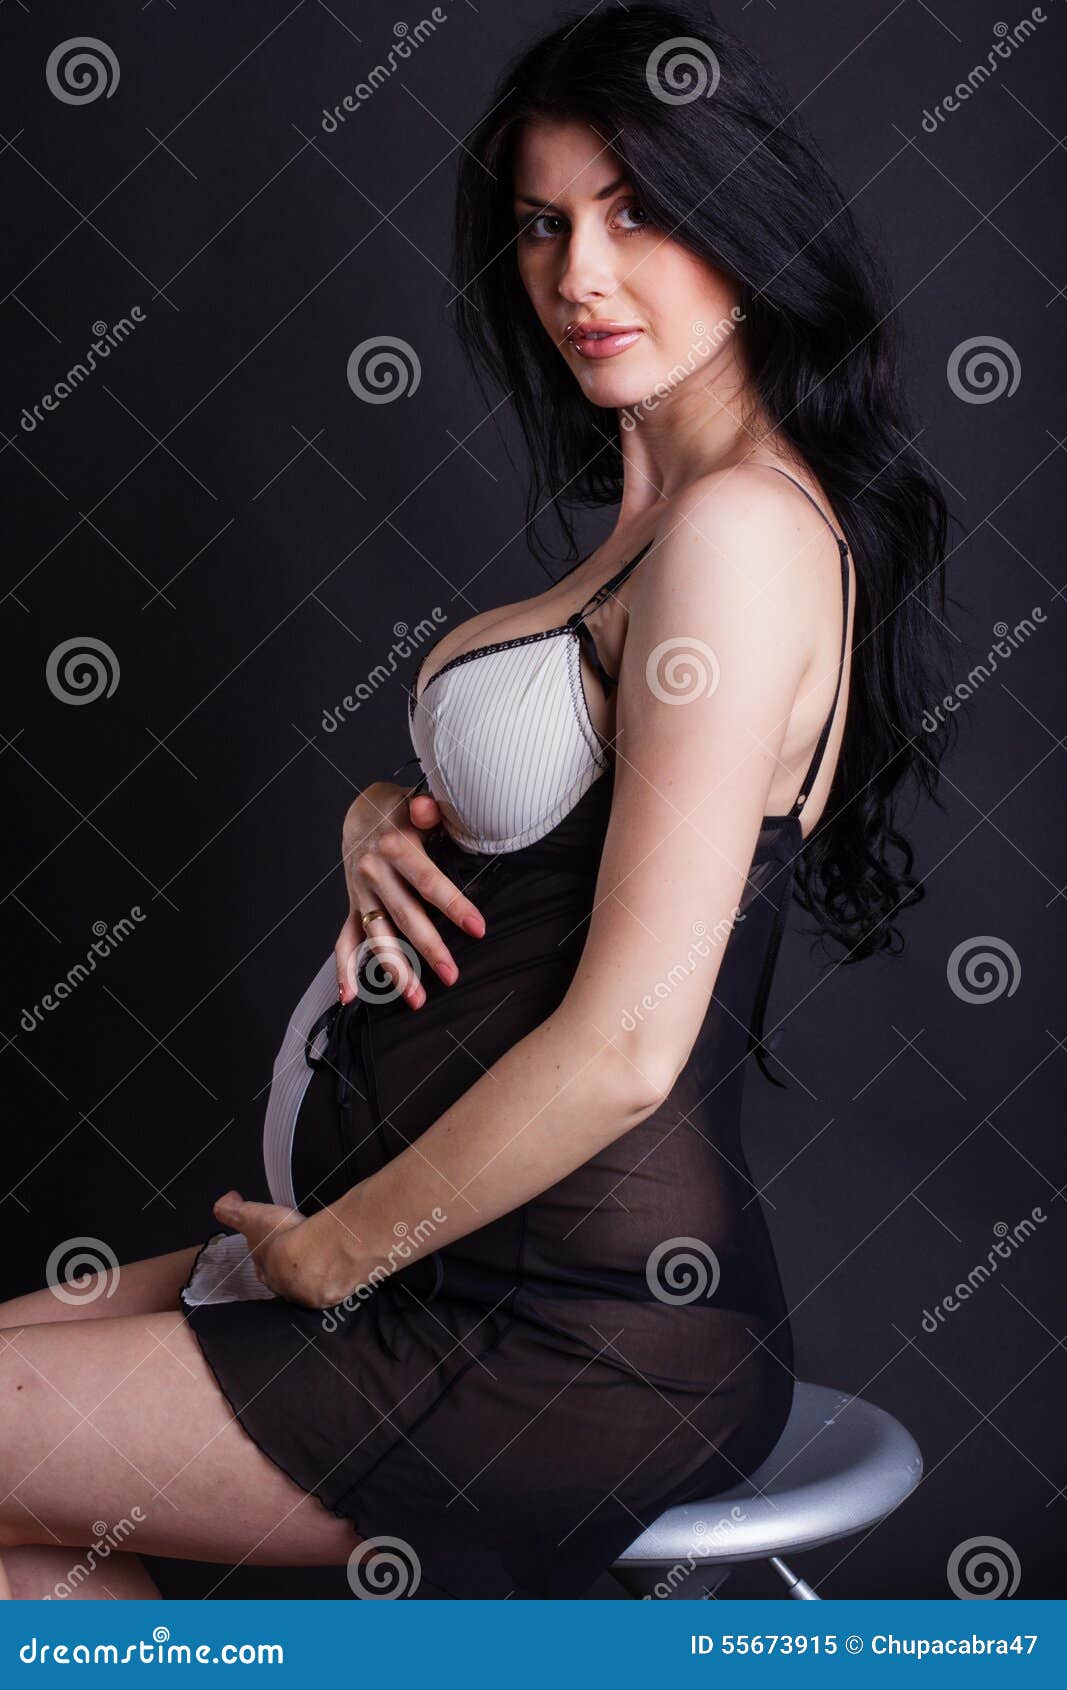 deepa nayar add photo sexy pregnant black girls